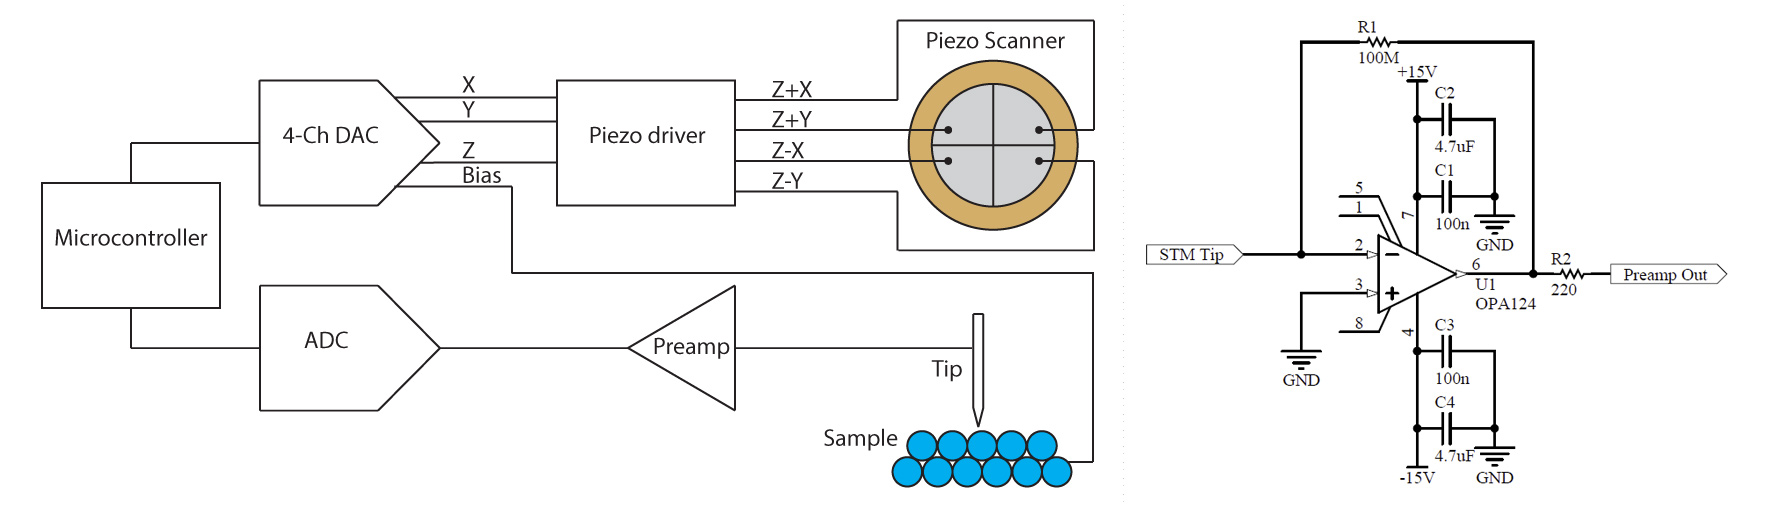 DIY STM microscope circuit and preamp diagrams. Created by Dan Berard.